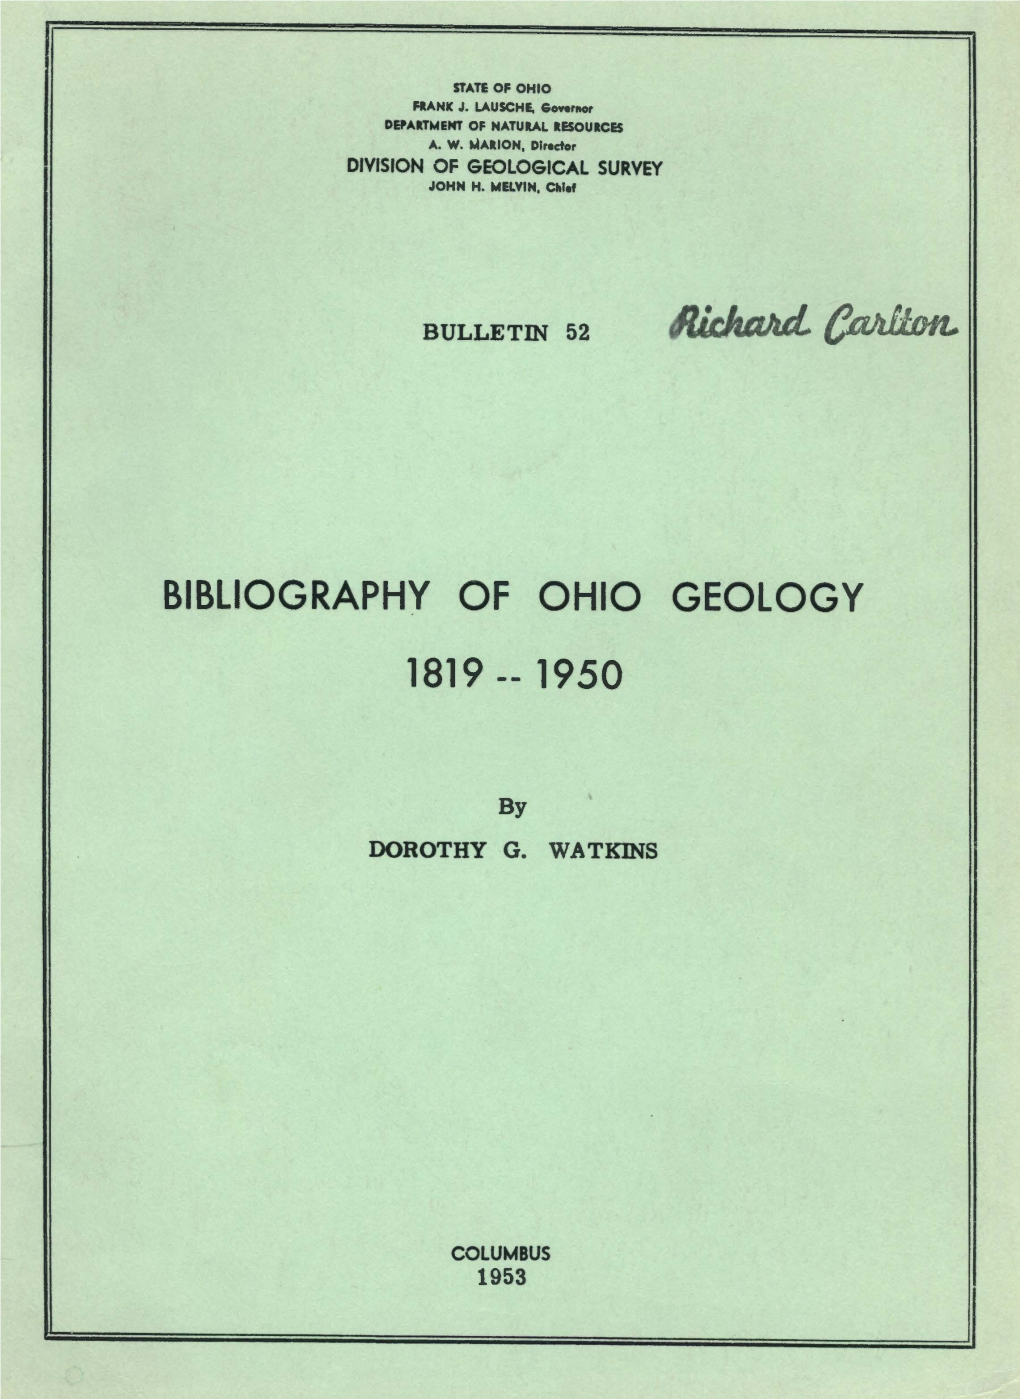 Bibliography of Ohio Geology 1819 -- 1950